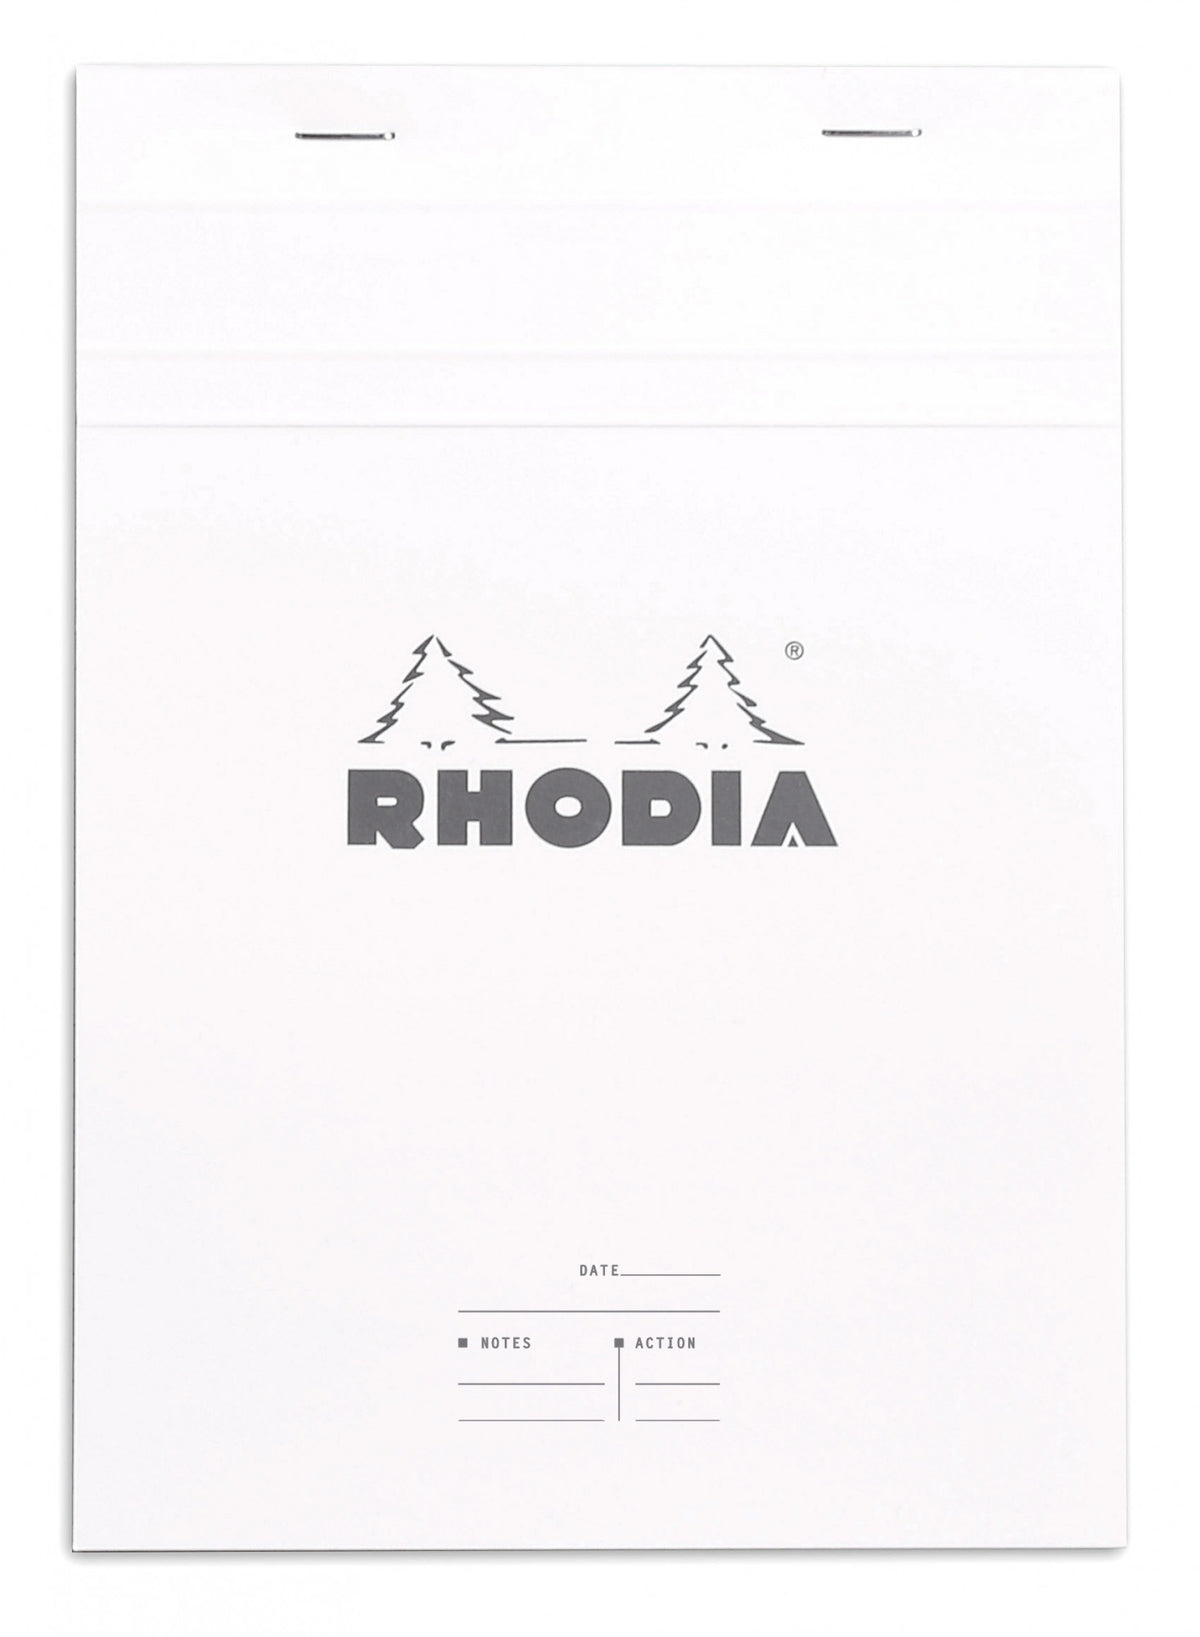 Rhodia #16 Classic Staplebound Notebook - Ice